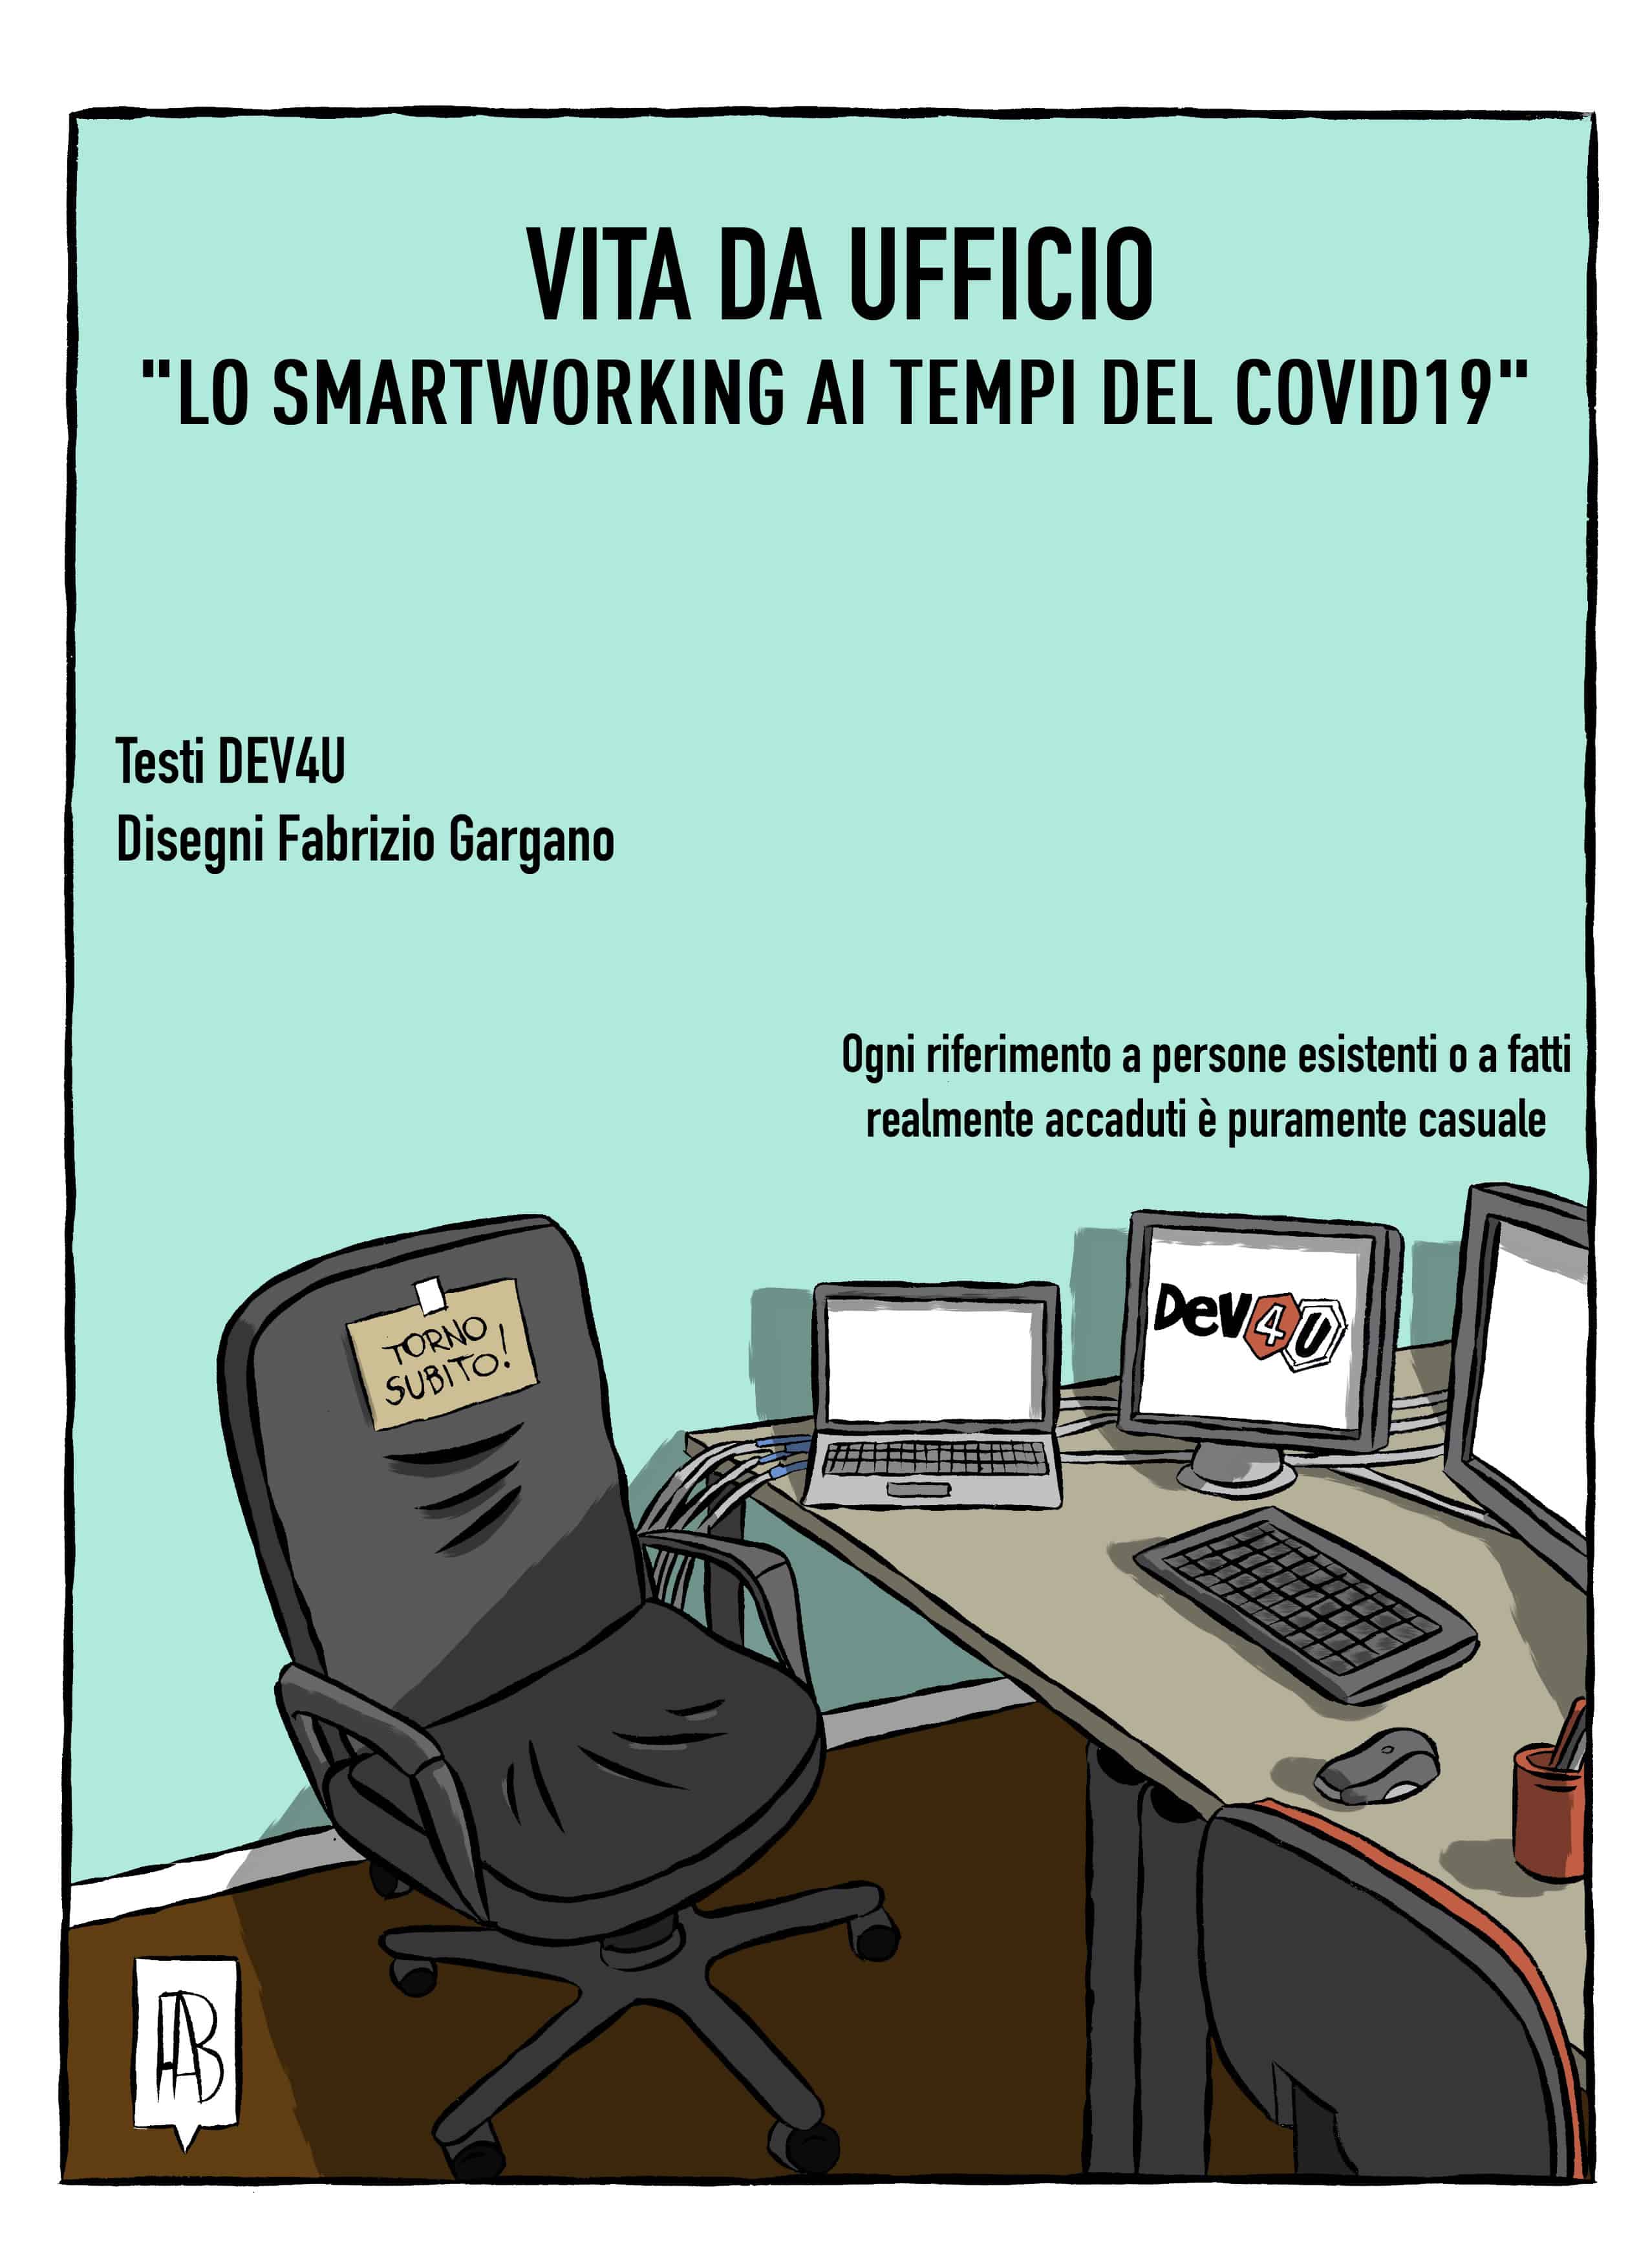 #dev4u #vitadaufficio #smartworking #covid19